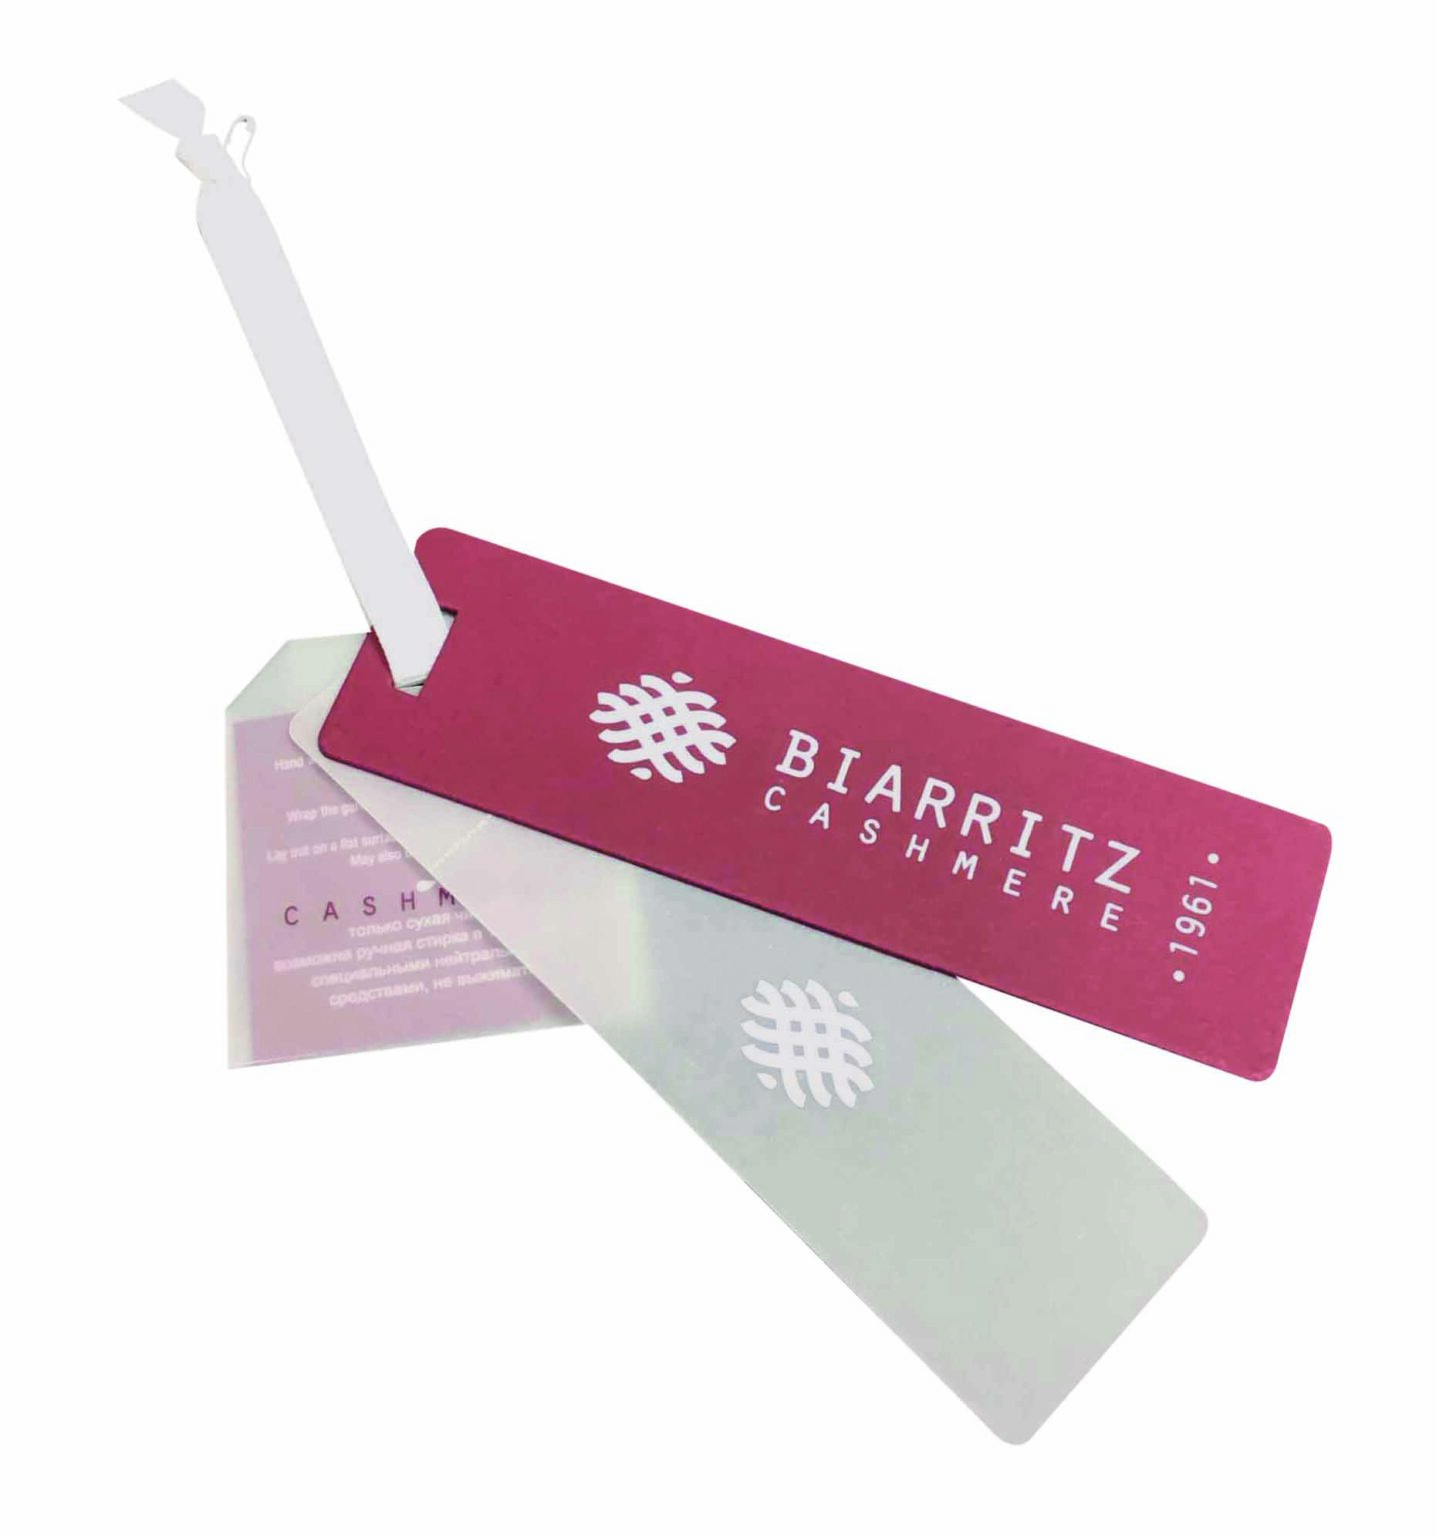 biarritz cartellini personalizzati biarritz cashmere misure varie nastro piatto rifipack